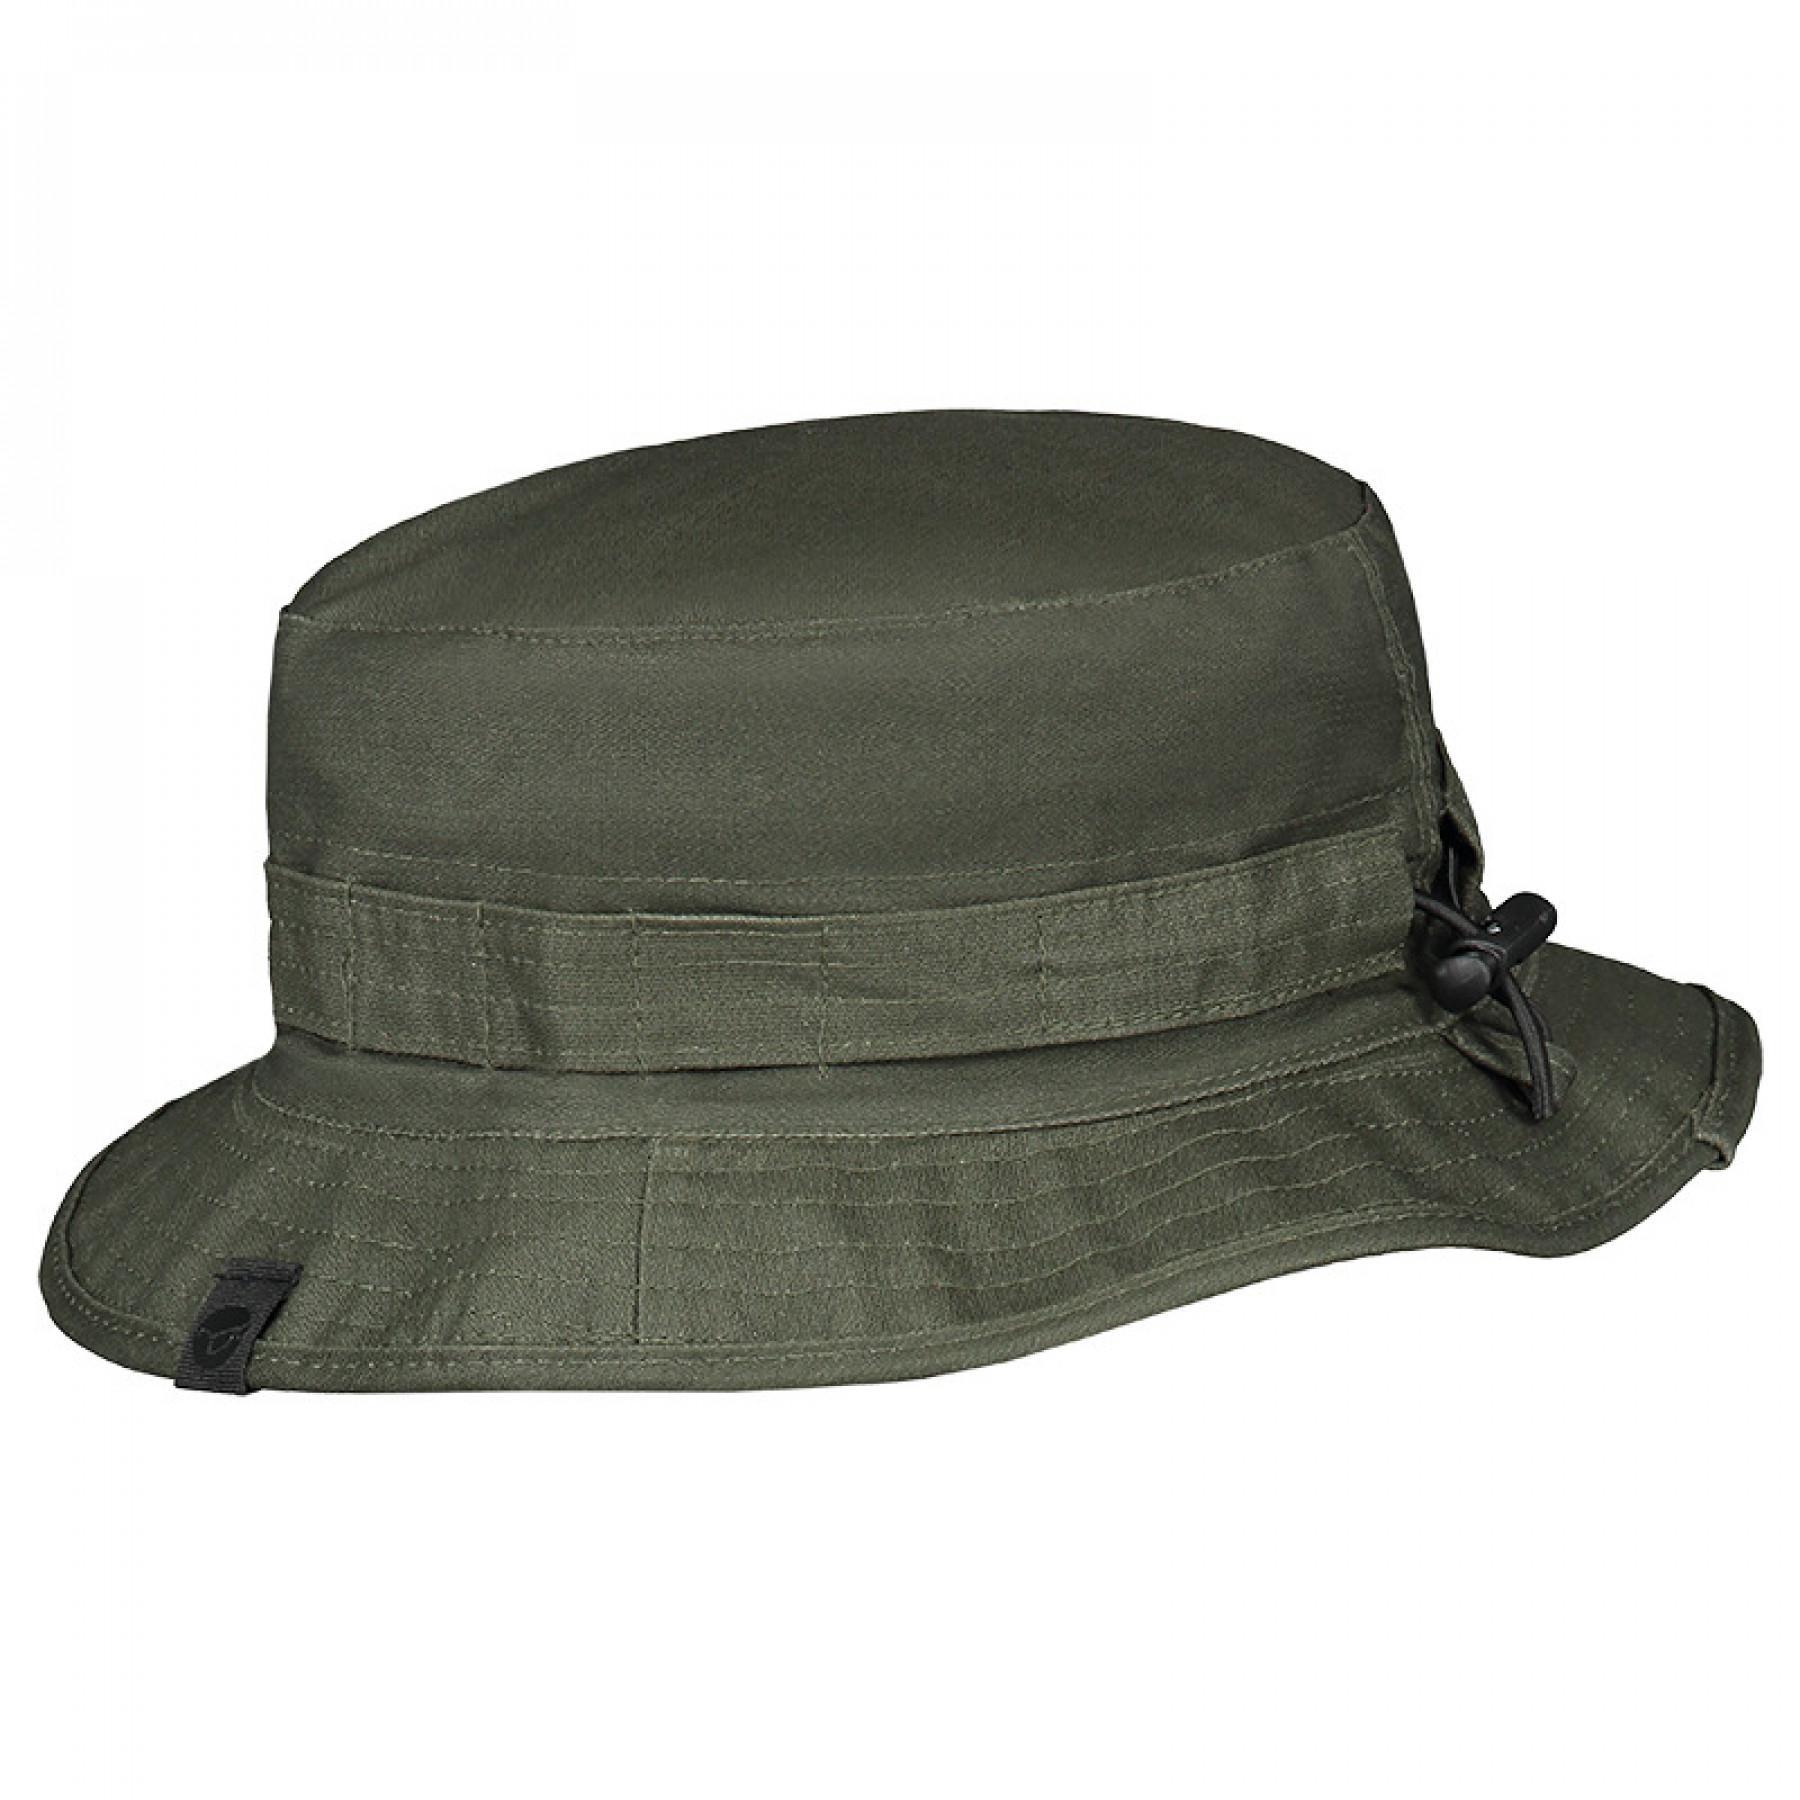 Korda Digi Boonie Hat Limited Edition for sale online KBH17 Camouflage 